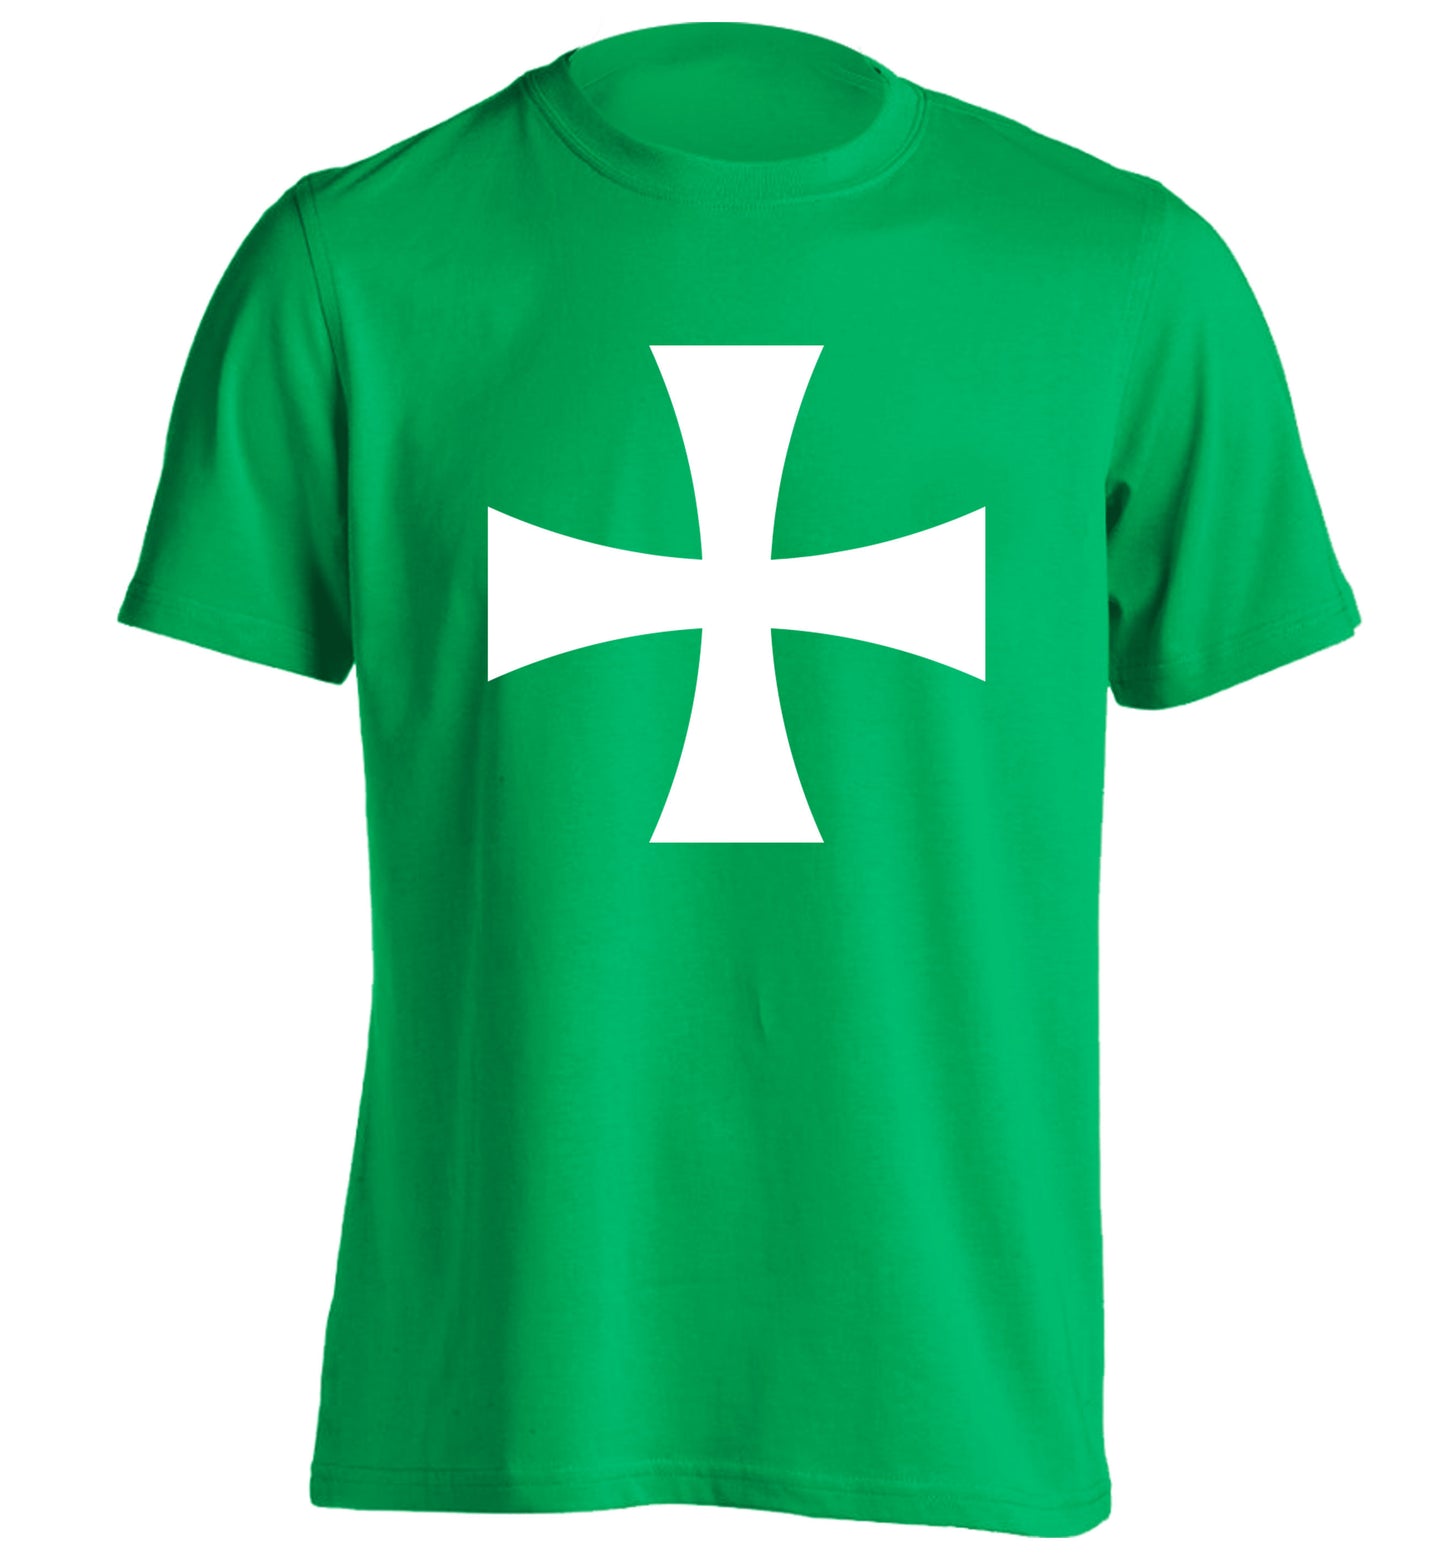 Knights Templar cross adults unisex green Tshirt 2XL